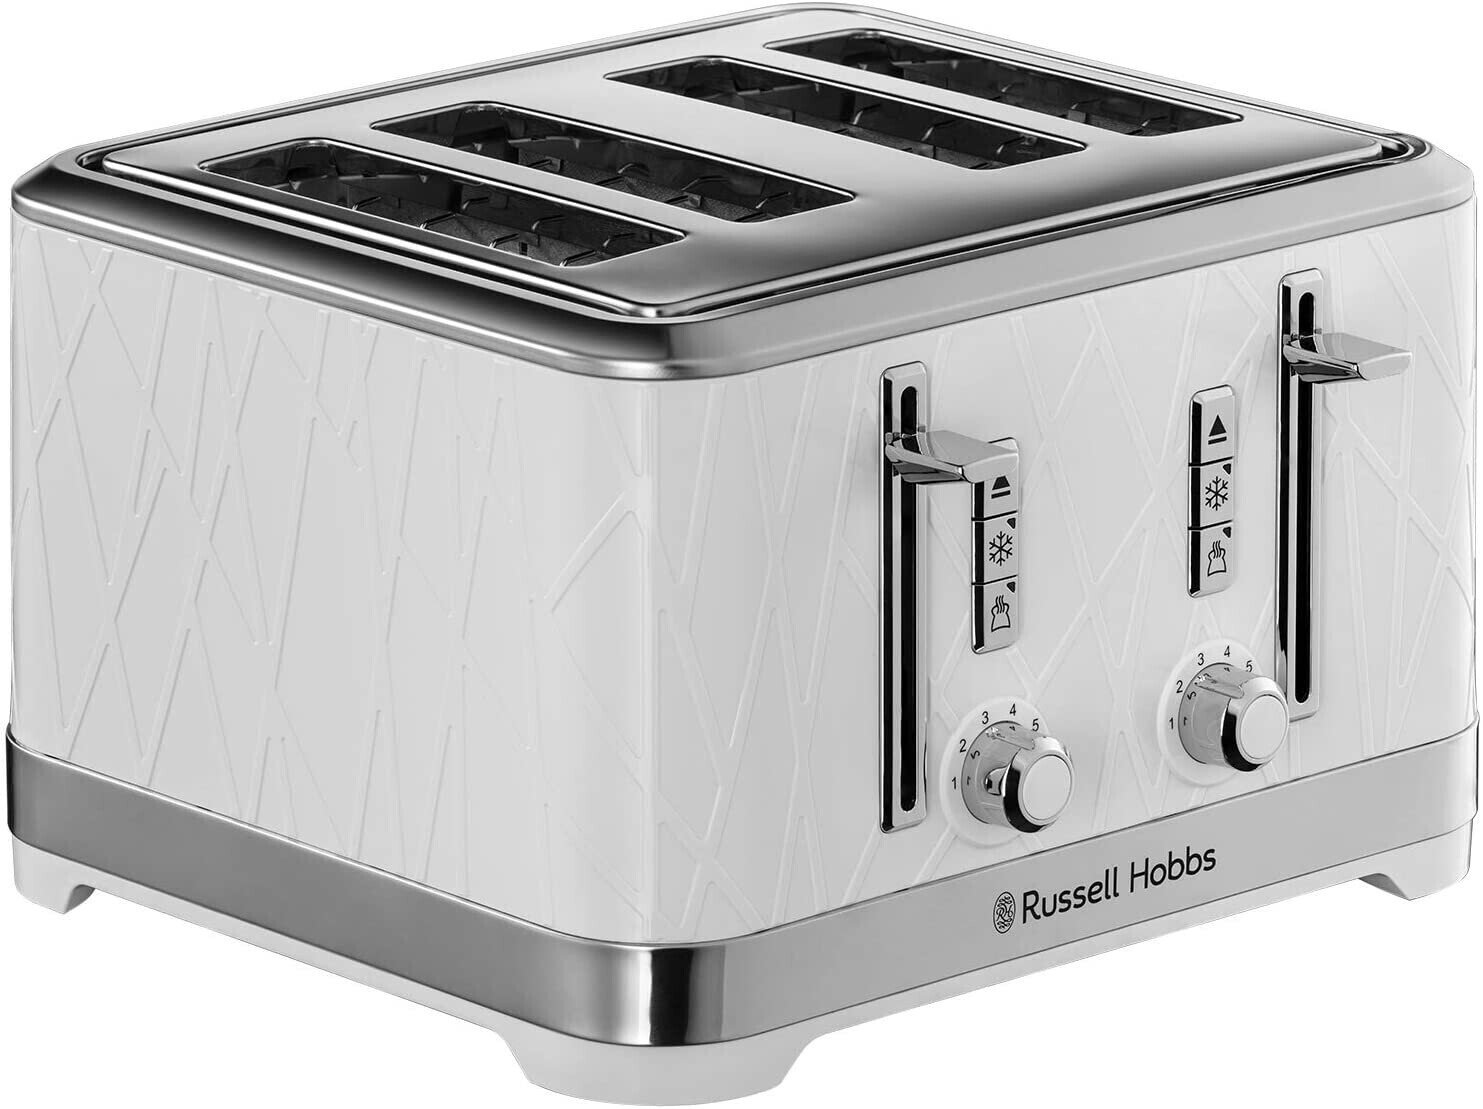 https://cdn.idealo.com/folder/Product/201512/1/201512144/s3_produktbild_max/russell-hobbs-28100-structure-toaster-4-slice-contemporary-design.jpg